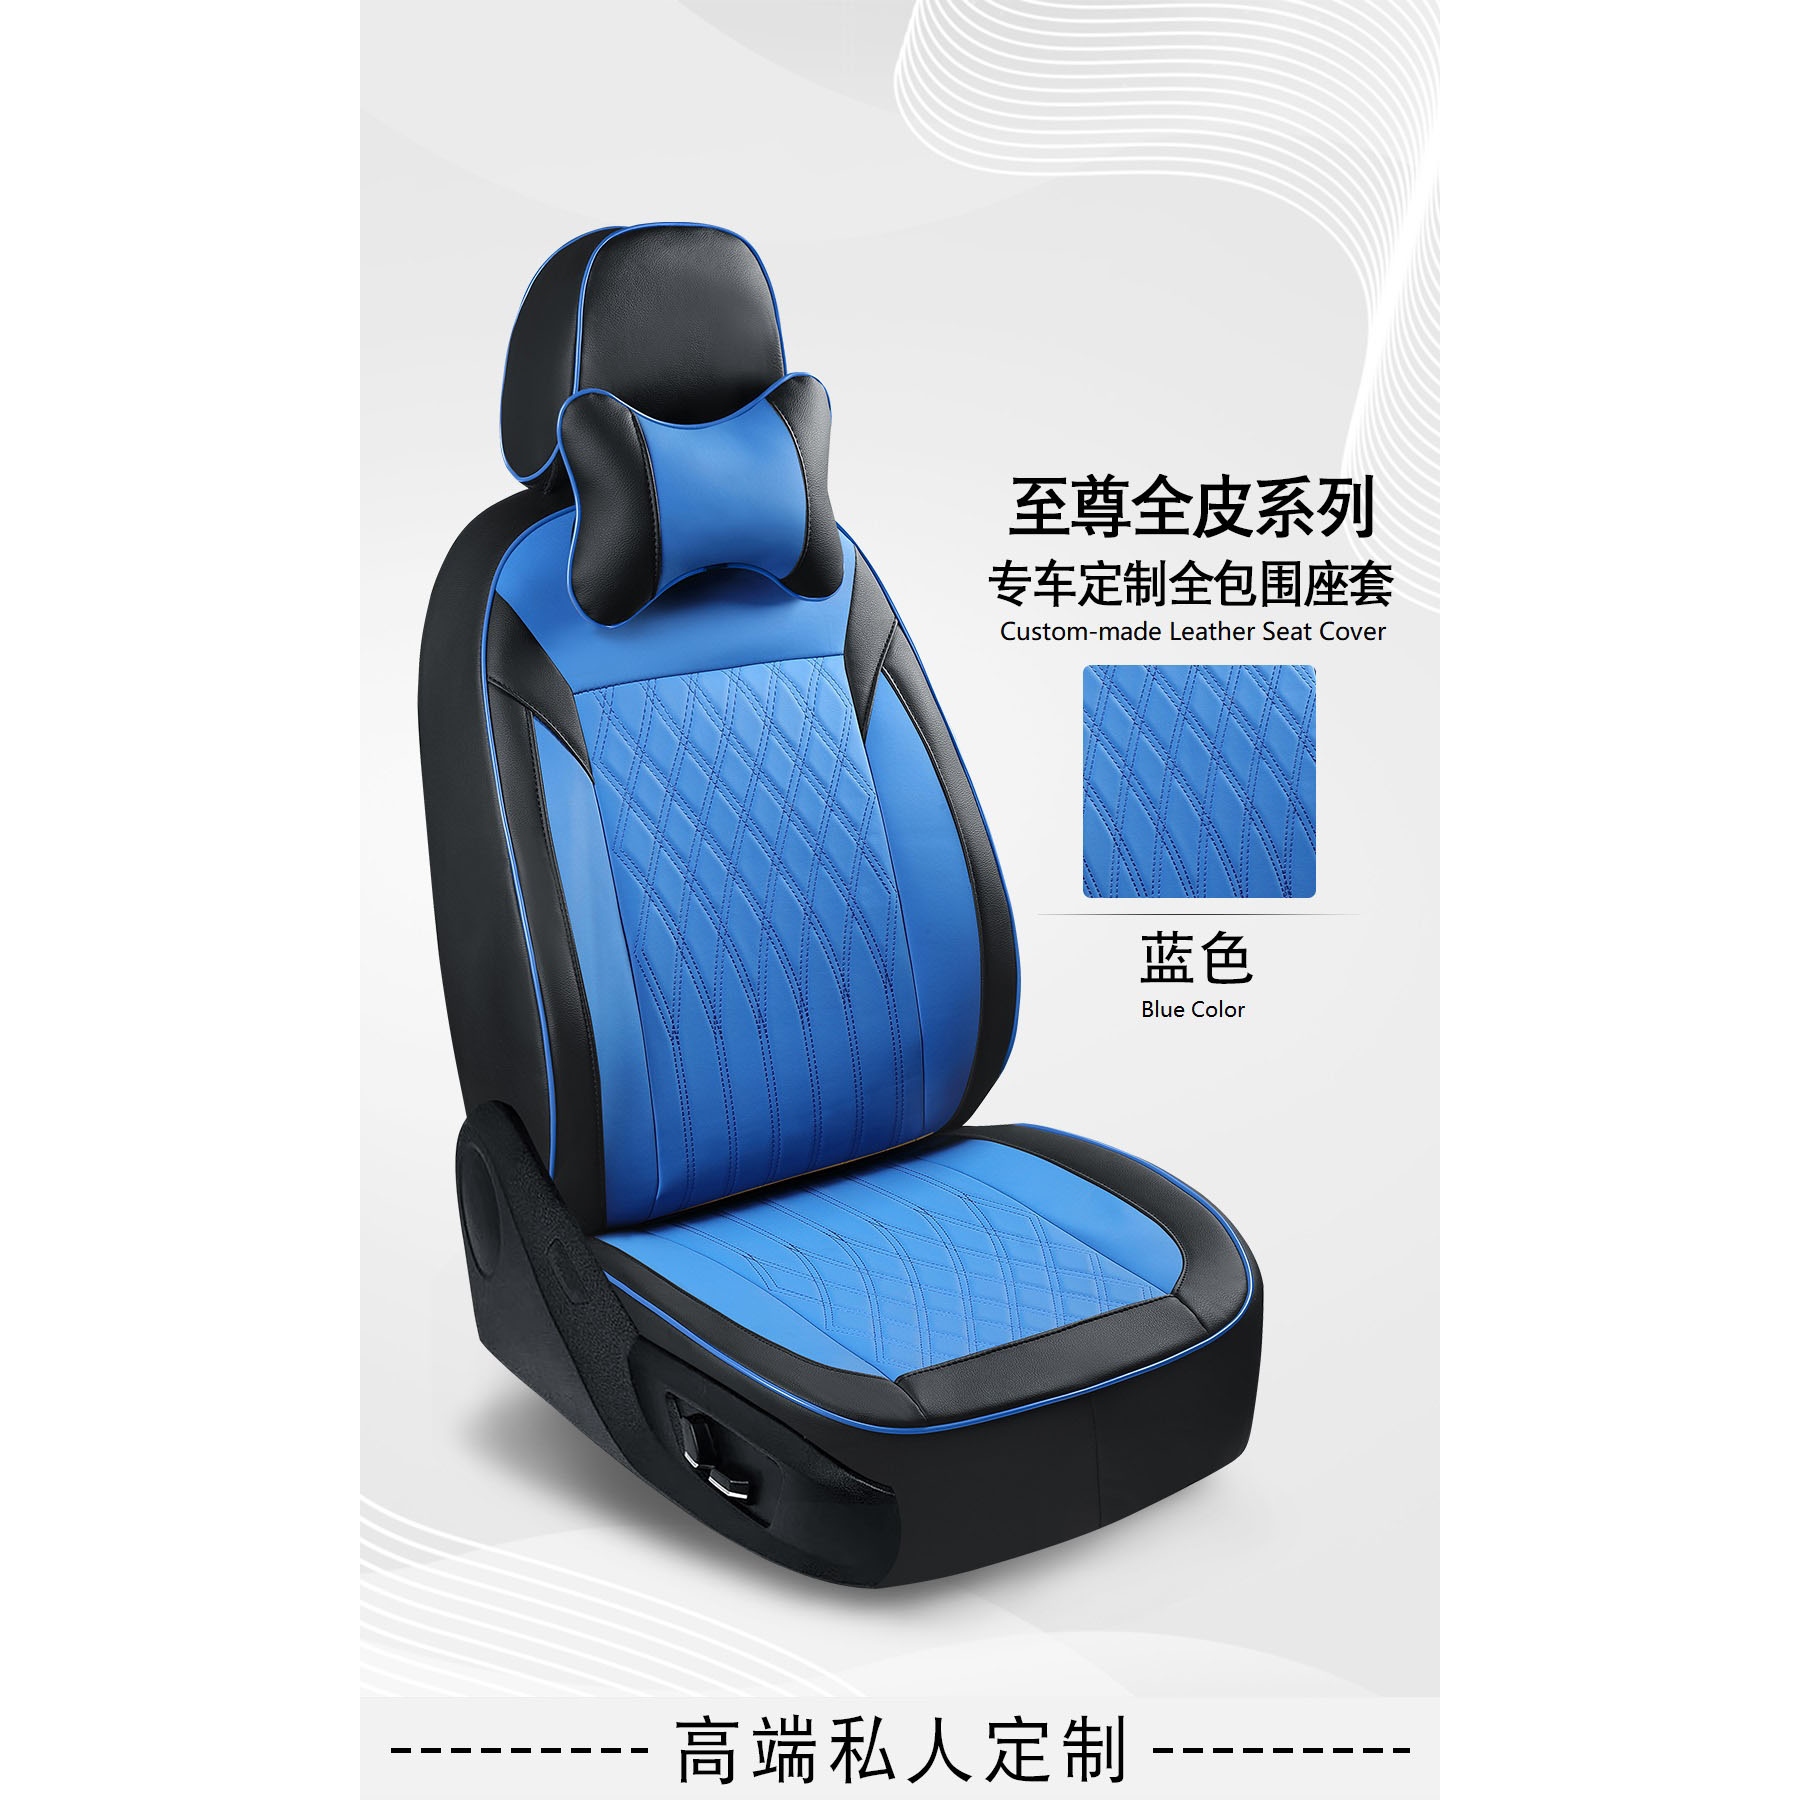 Toyota 86 Seat Covers, Leather Seats, Custom Interiors